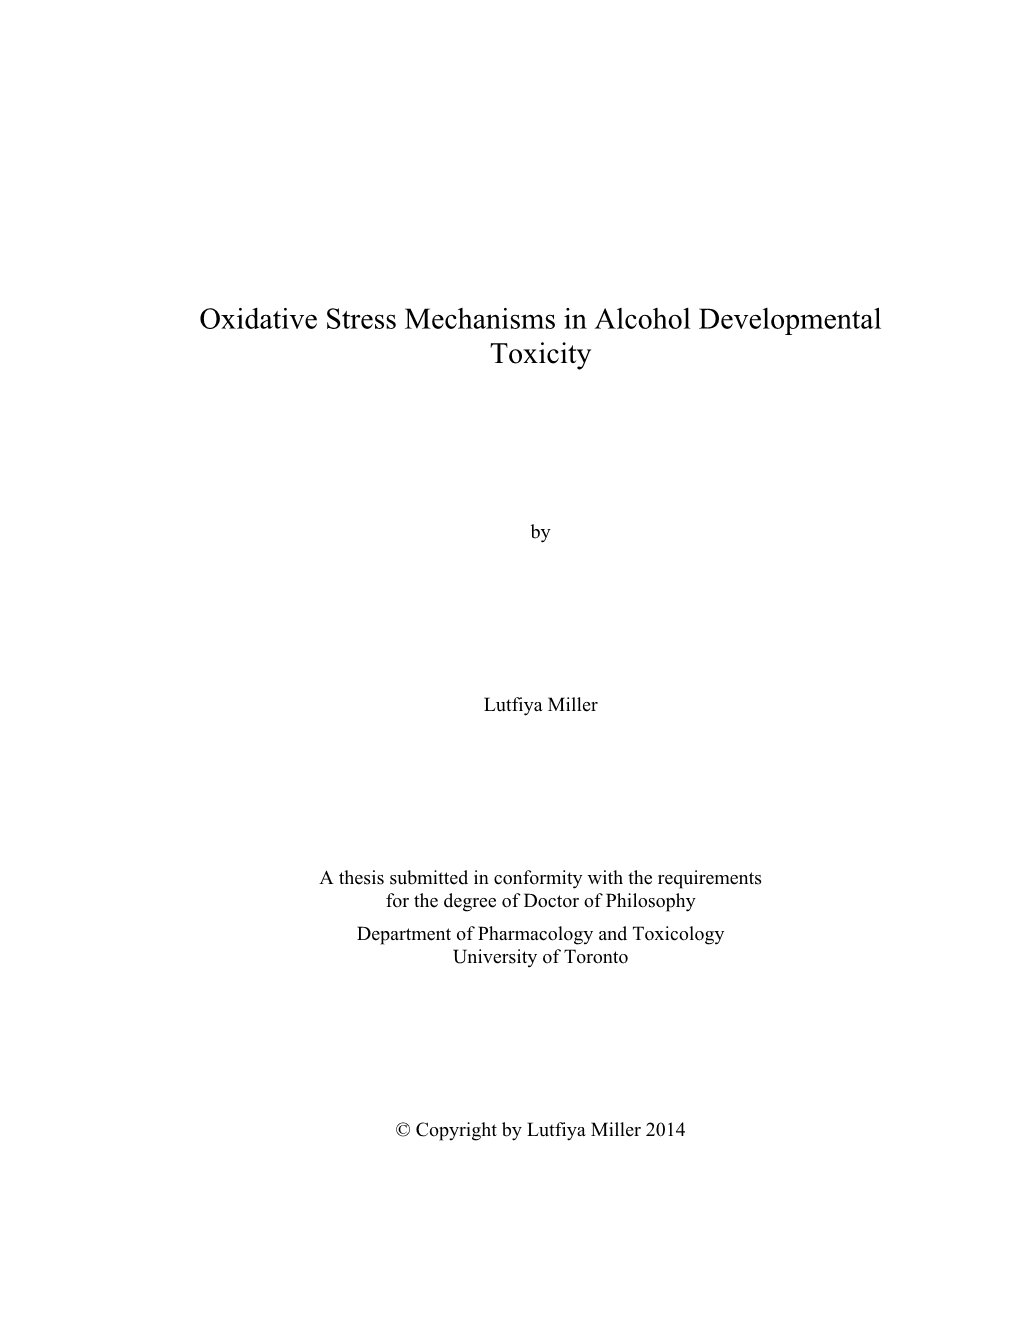 Oxidative Stress Mechanisms in Alcohol Developmental Toxicity